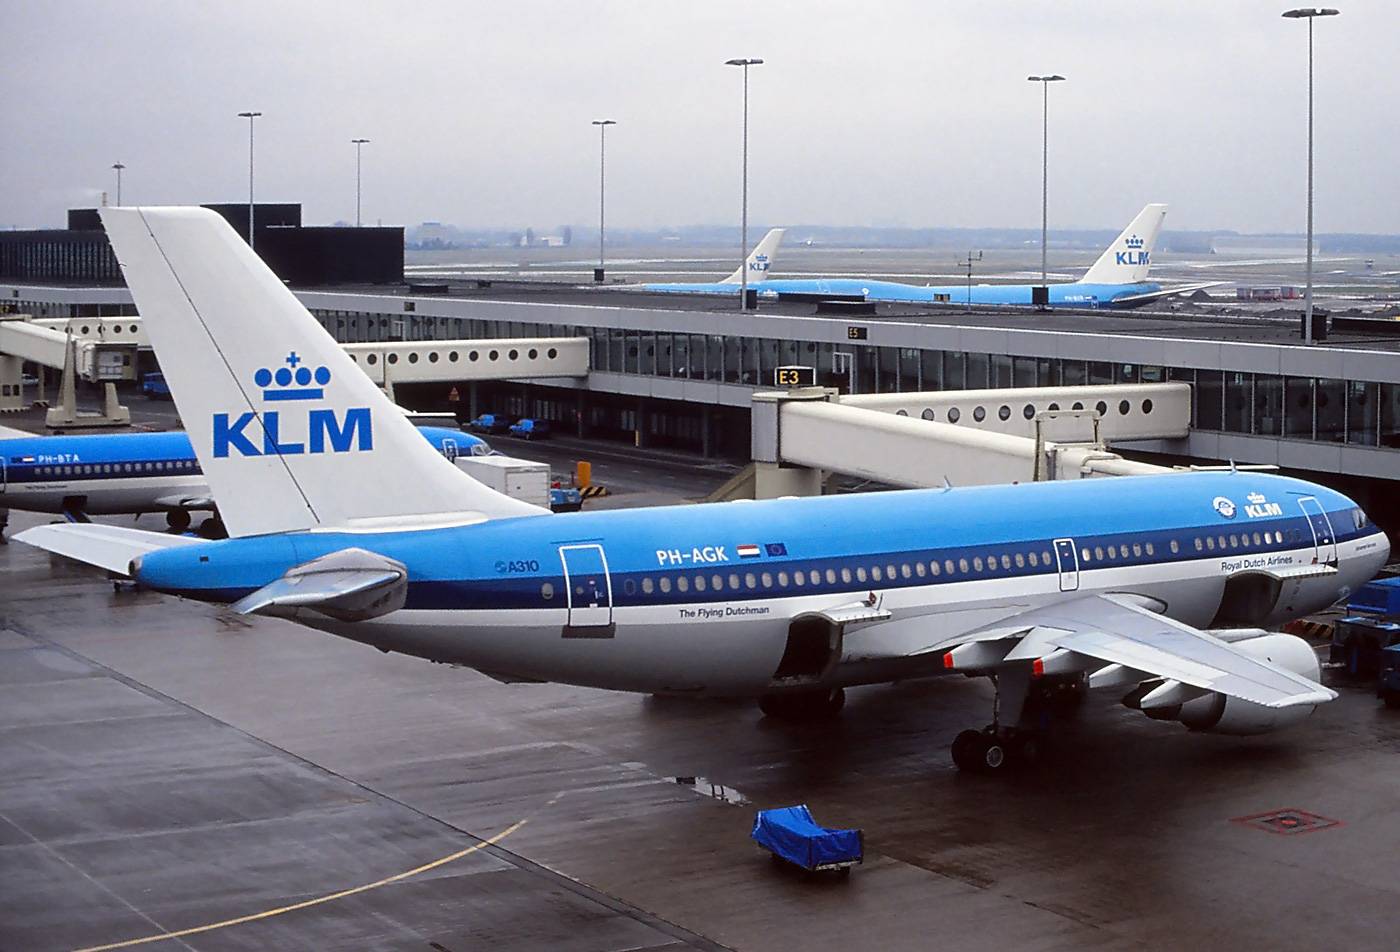 Авиаперевозчик клм (royal dutch airlines, клм): авиафлот, классы обслуживания, программа лояльности